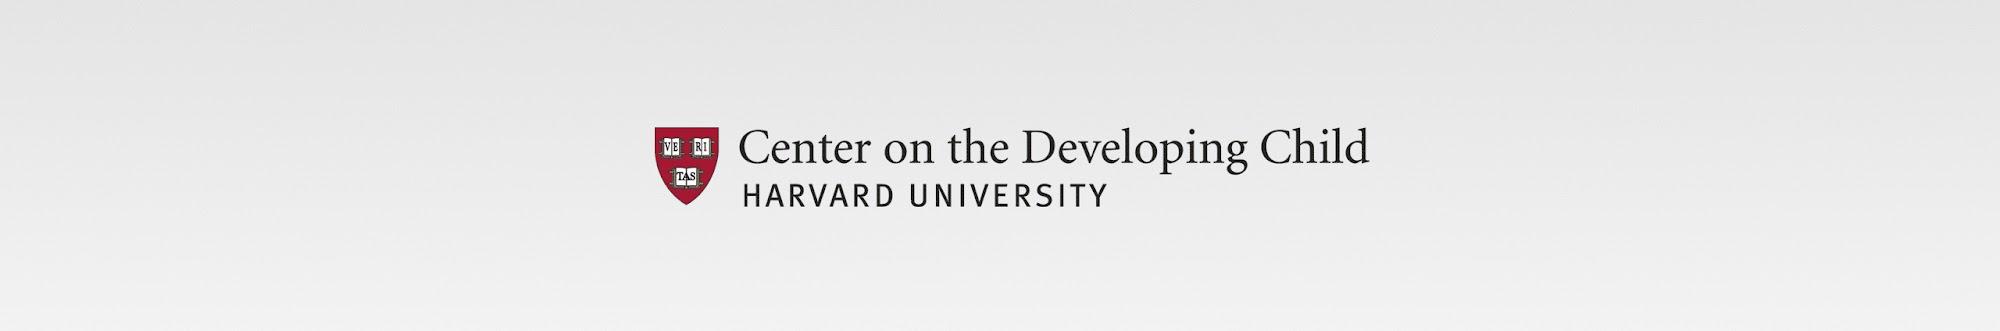 Center on the Developing Child at Harvard University